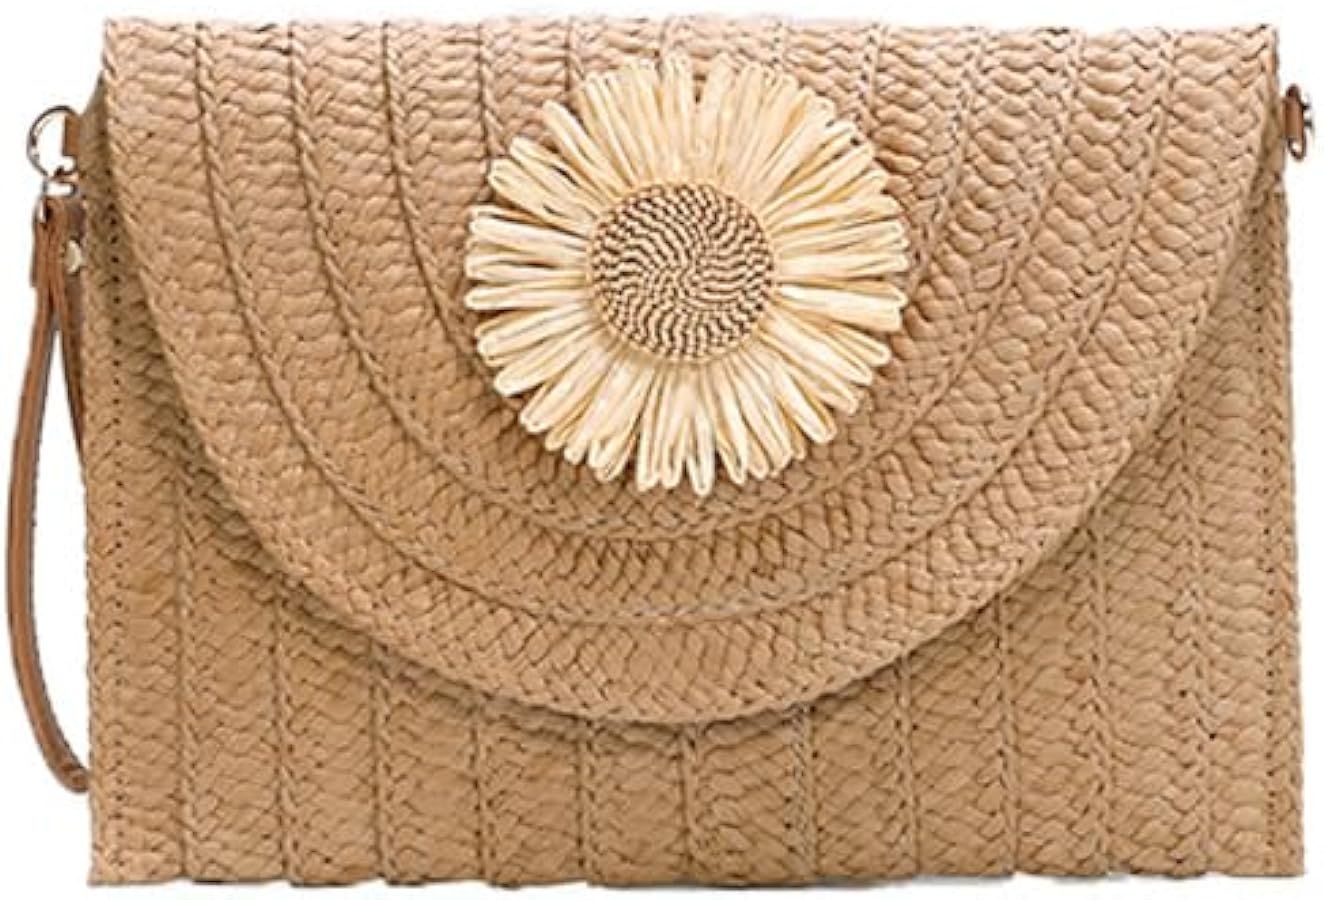 Tmore Weave Handbag,Straw Clutch Summer Evening Handbag Summer Beach Party Purse Woven Straw Bag ... | Amazon (US)